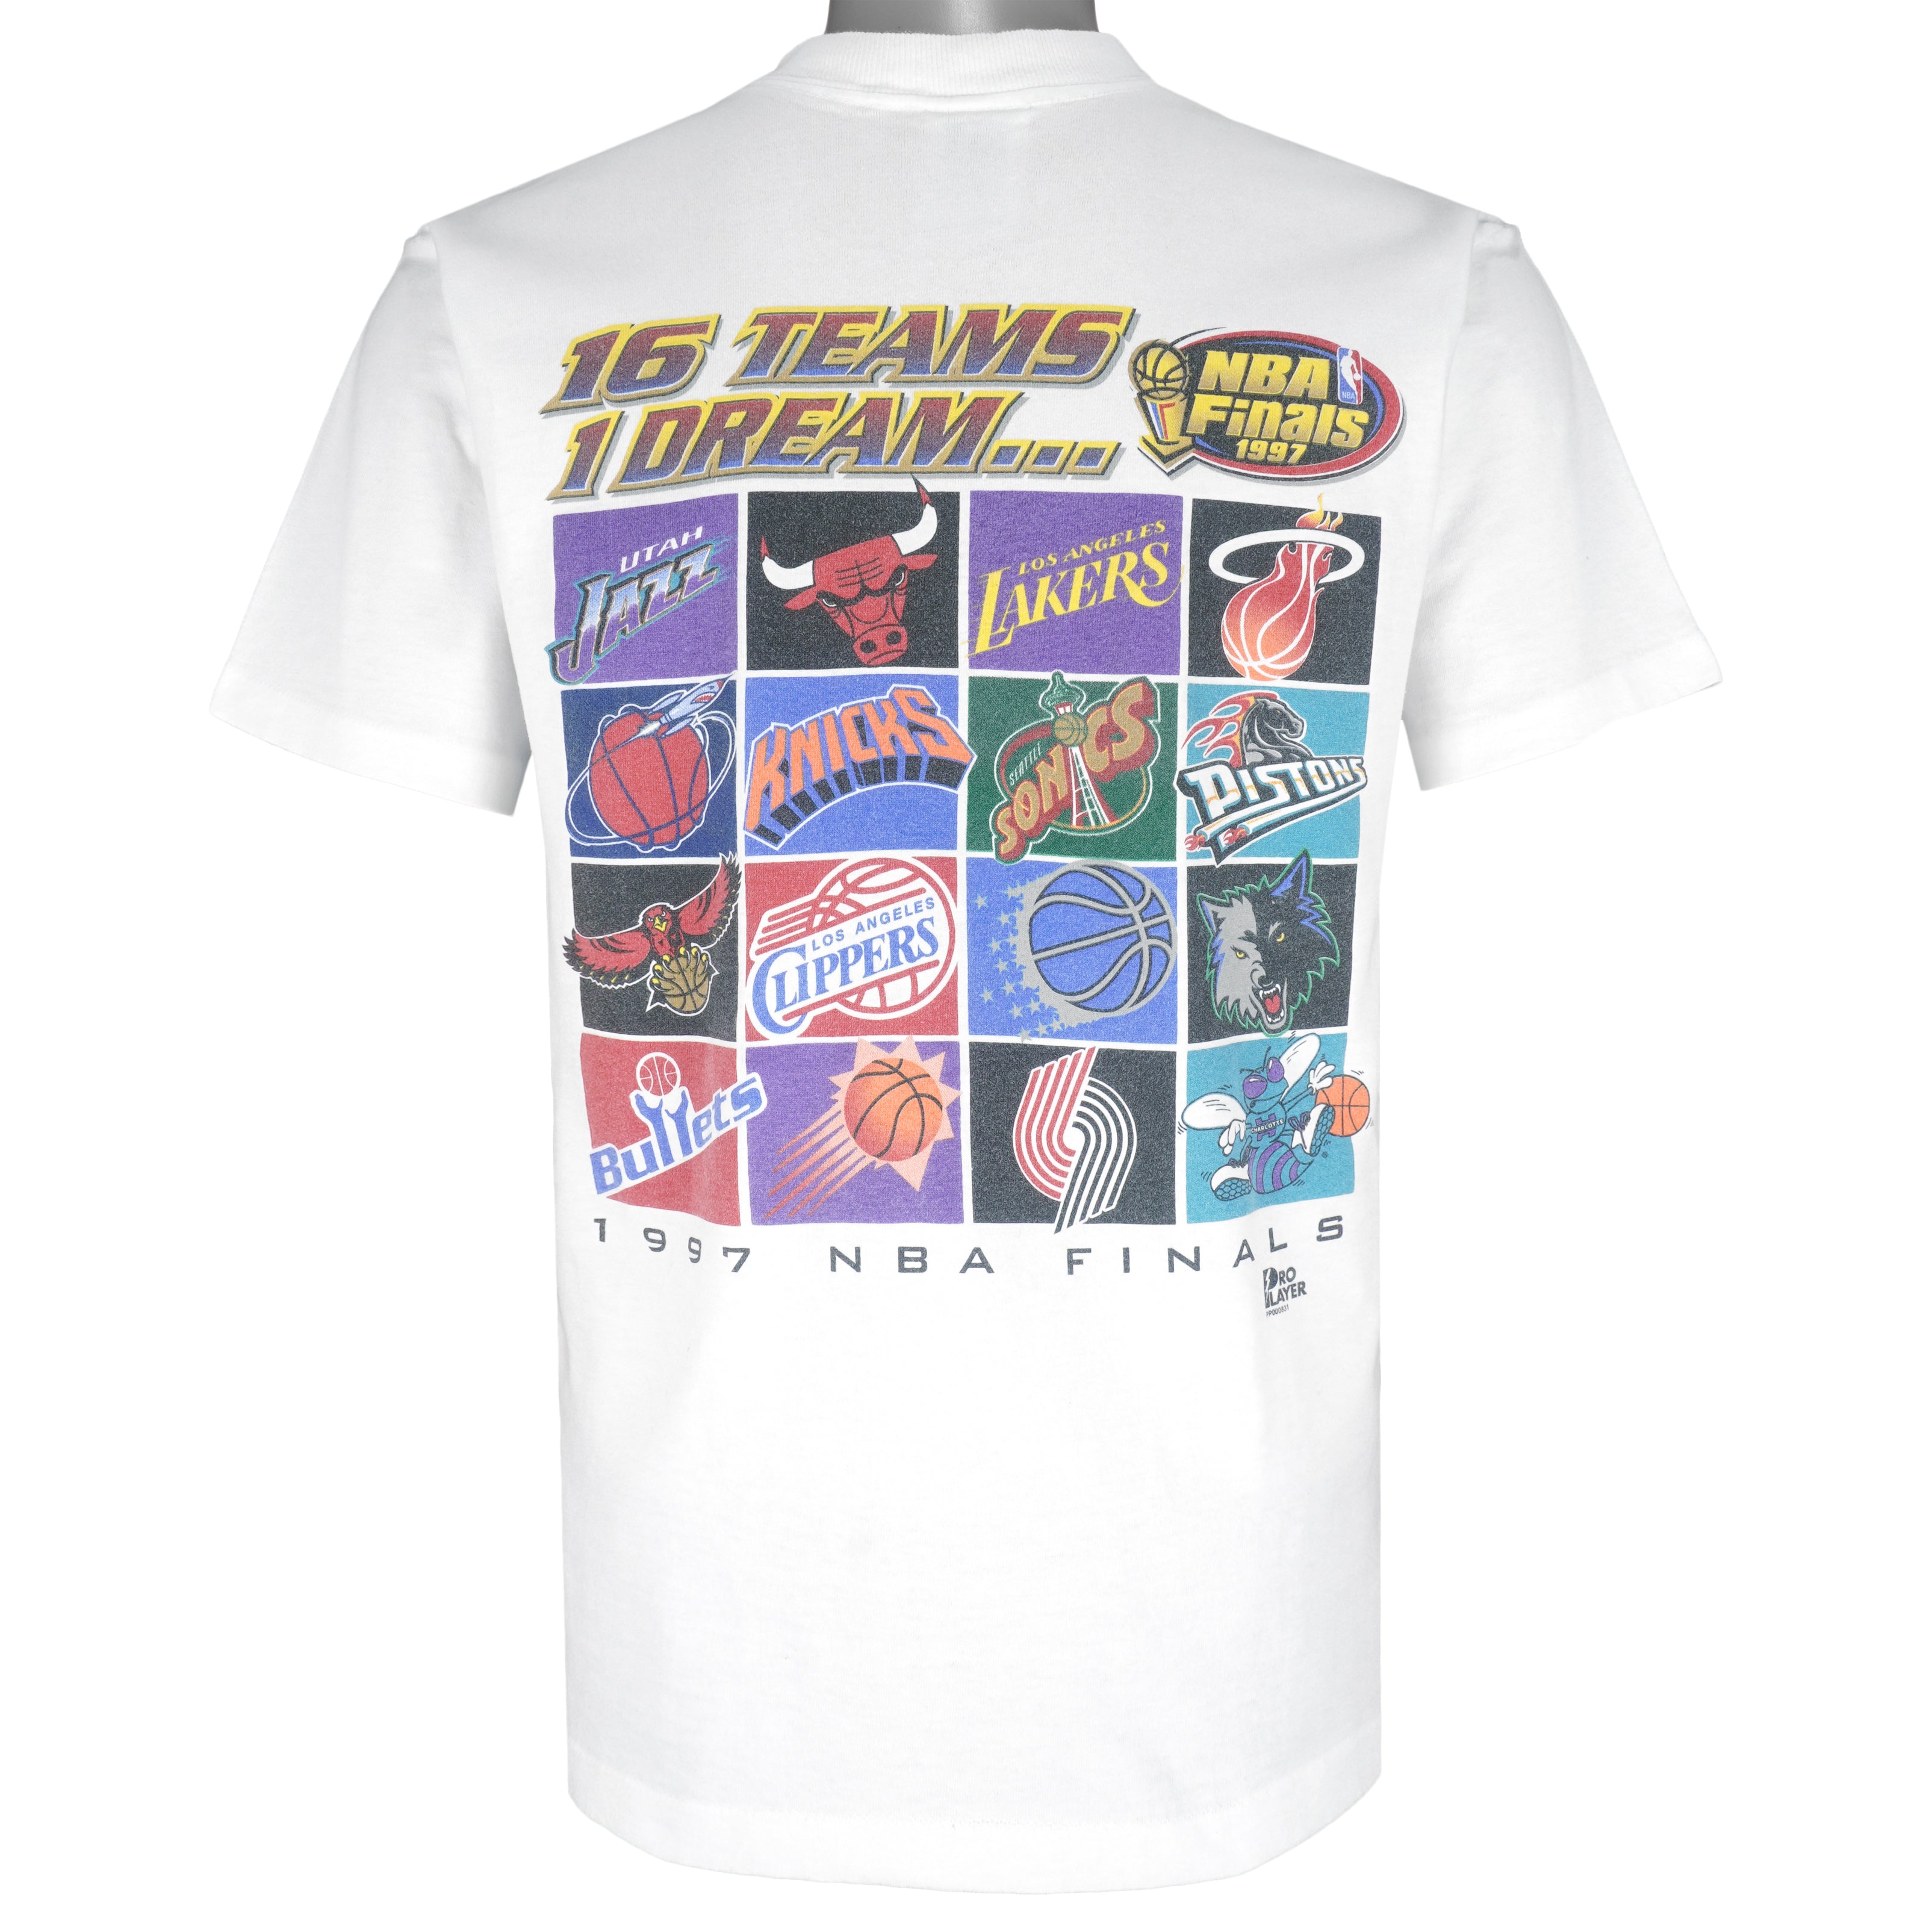 Vintage NBA (Pro Player) - 16 Teams 1 Dream Logo Finals T-Shirt